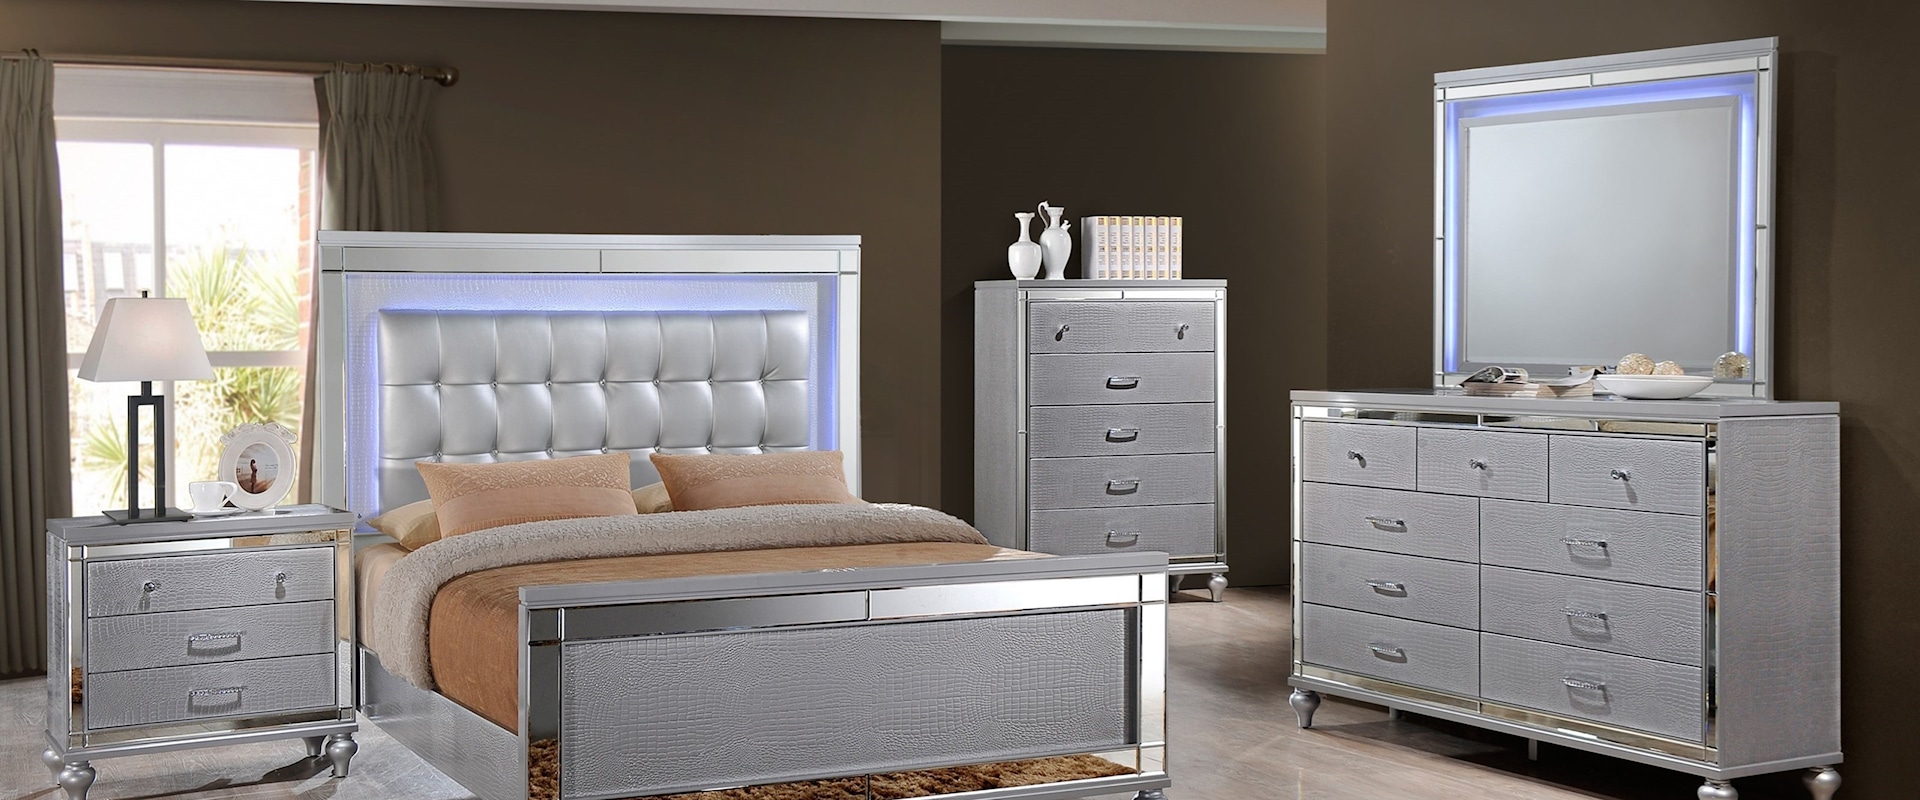 King LED Bed + Dresser + LED Mirror + 1 Nightstand